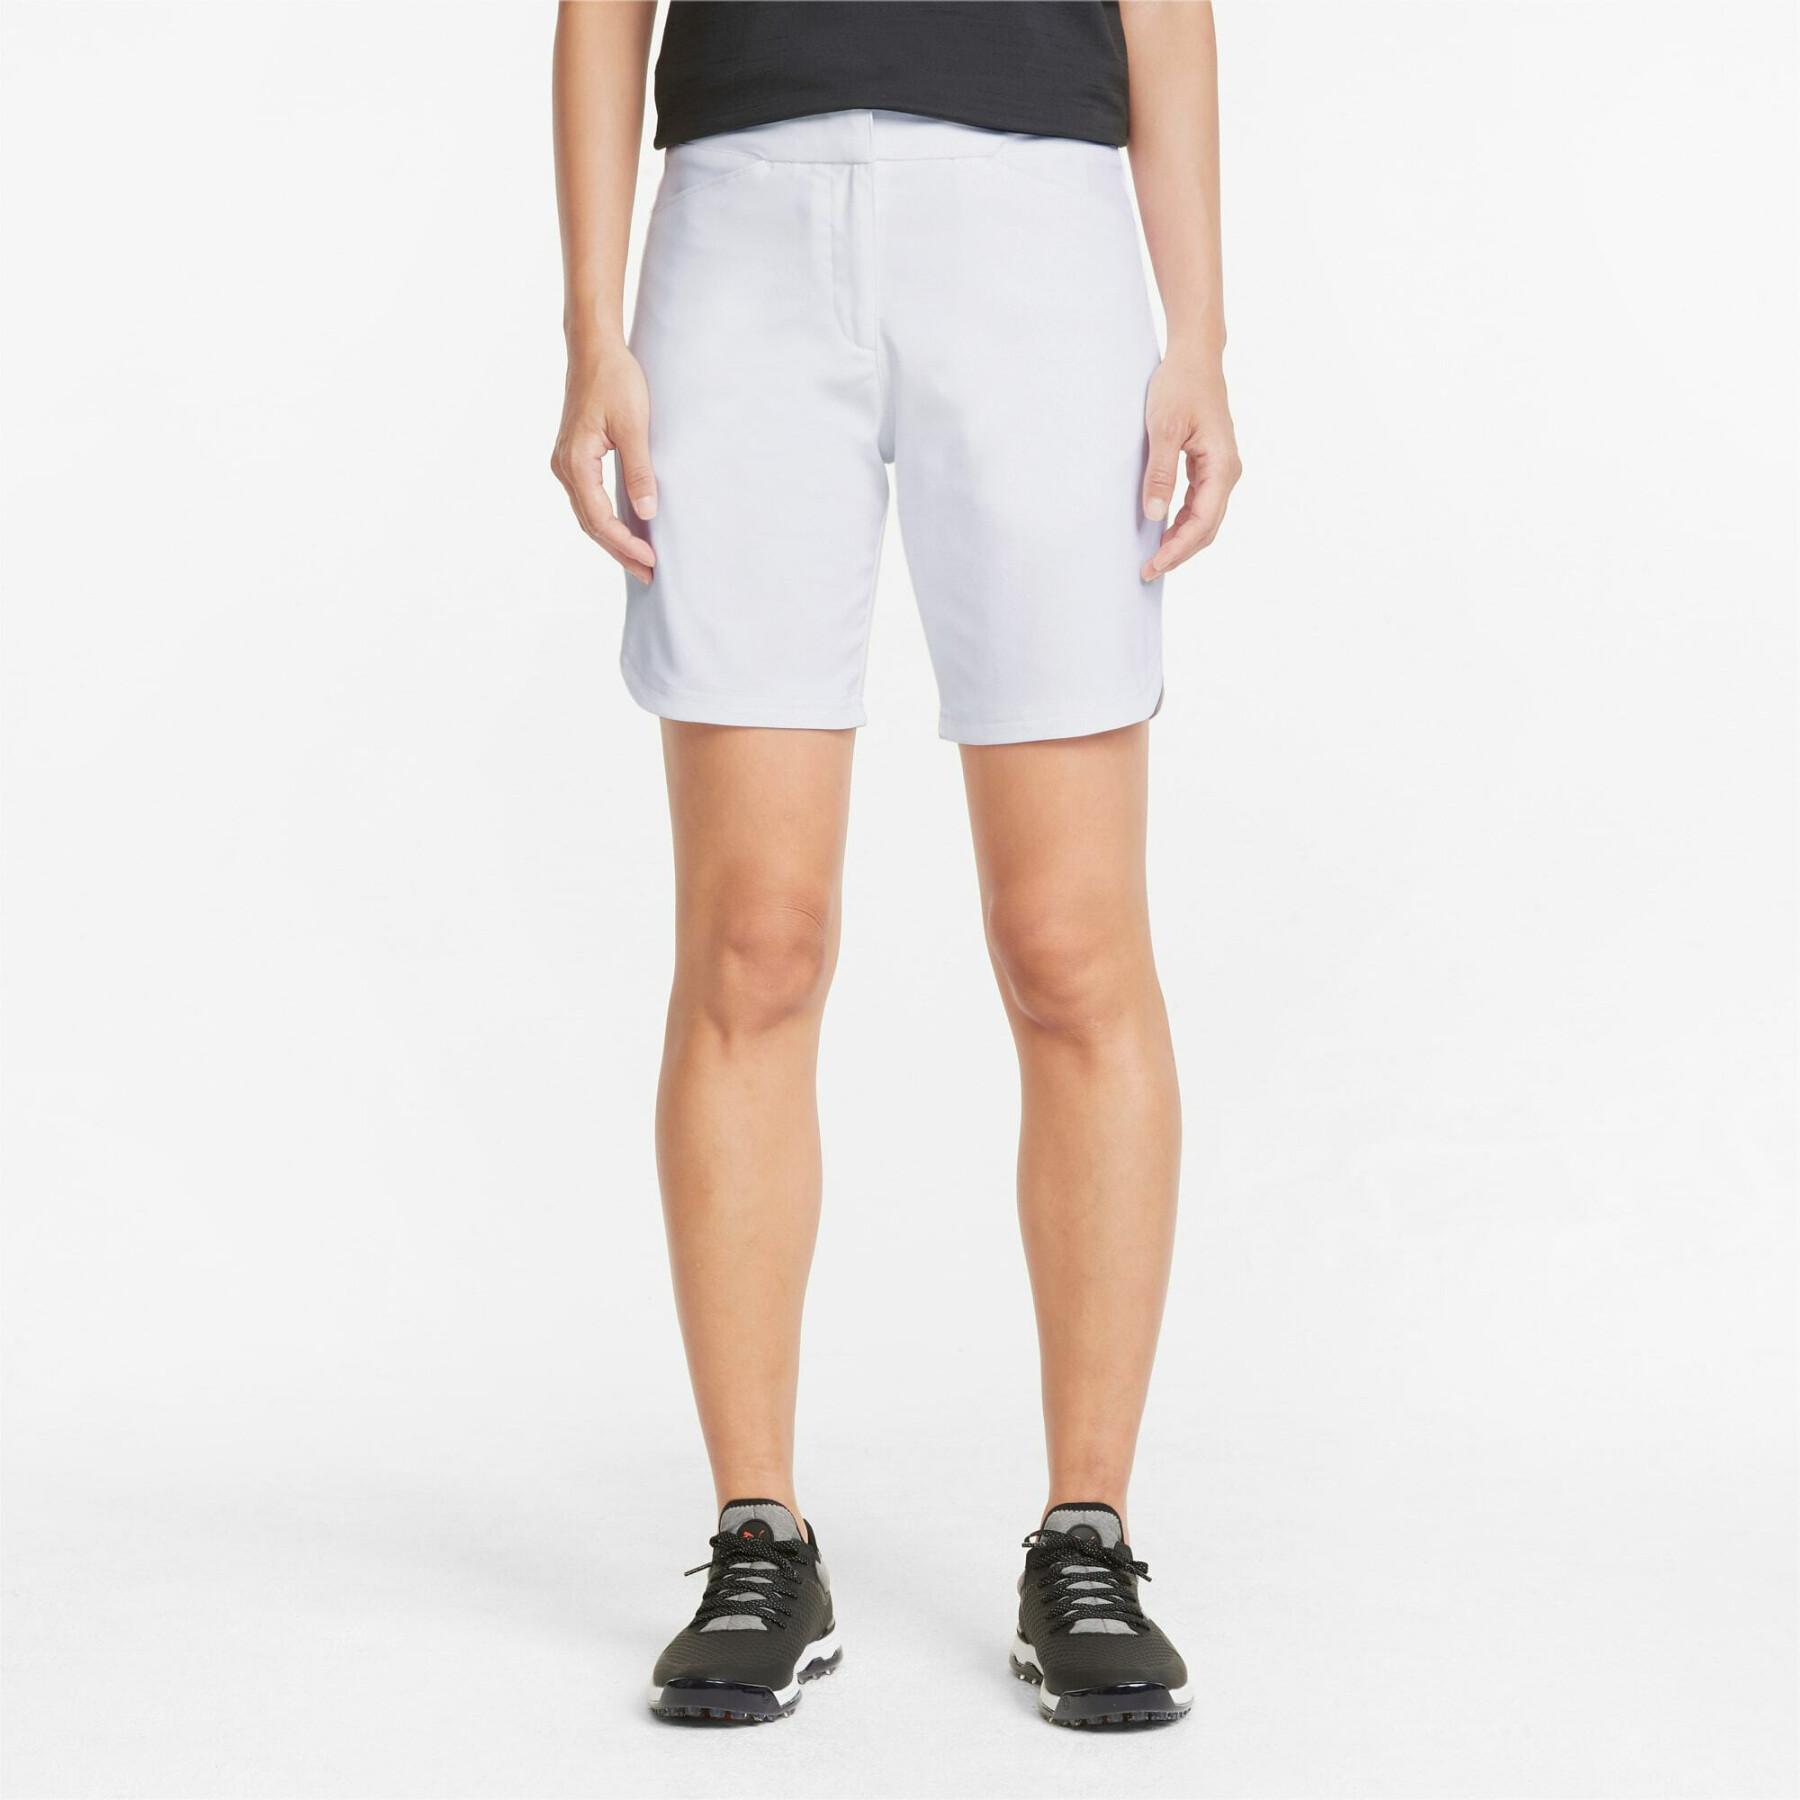 Bermuda-Shorts, Damen Puma